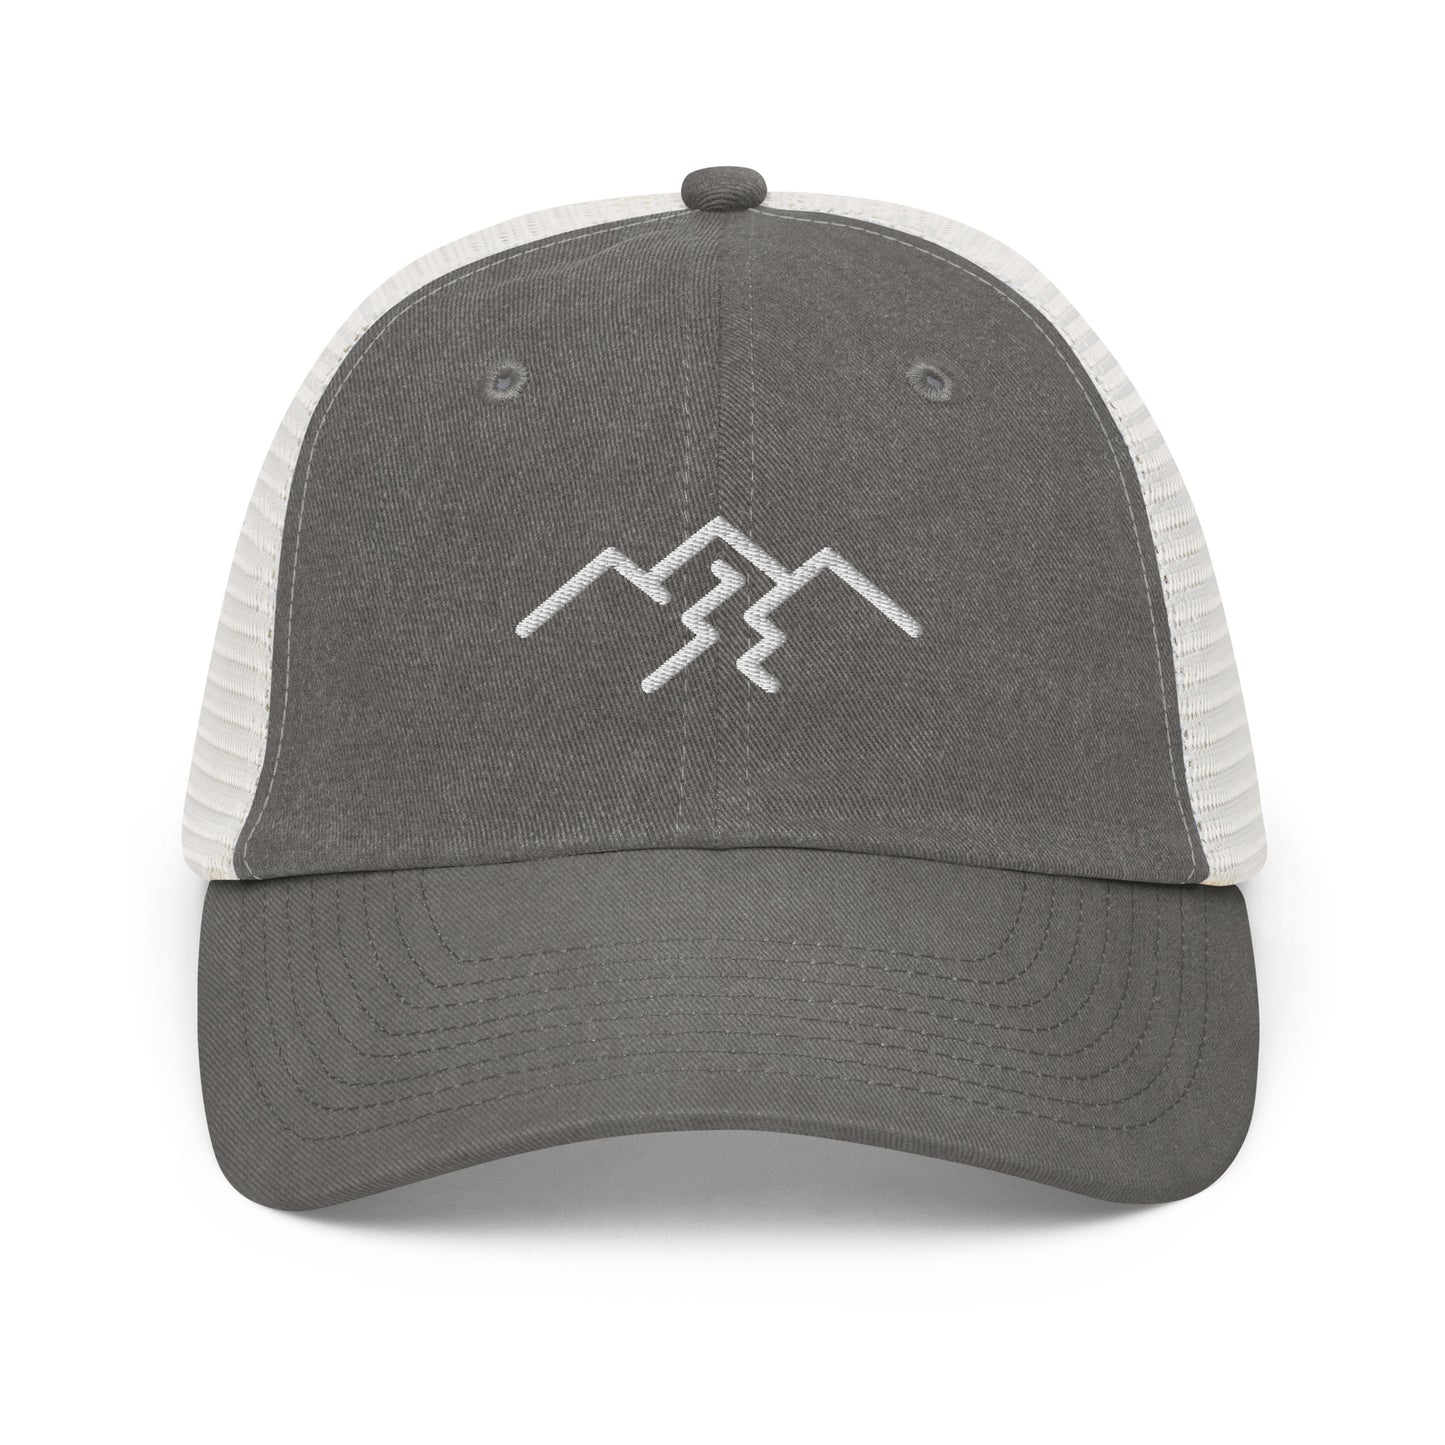 Trailhead Embroidered Hat